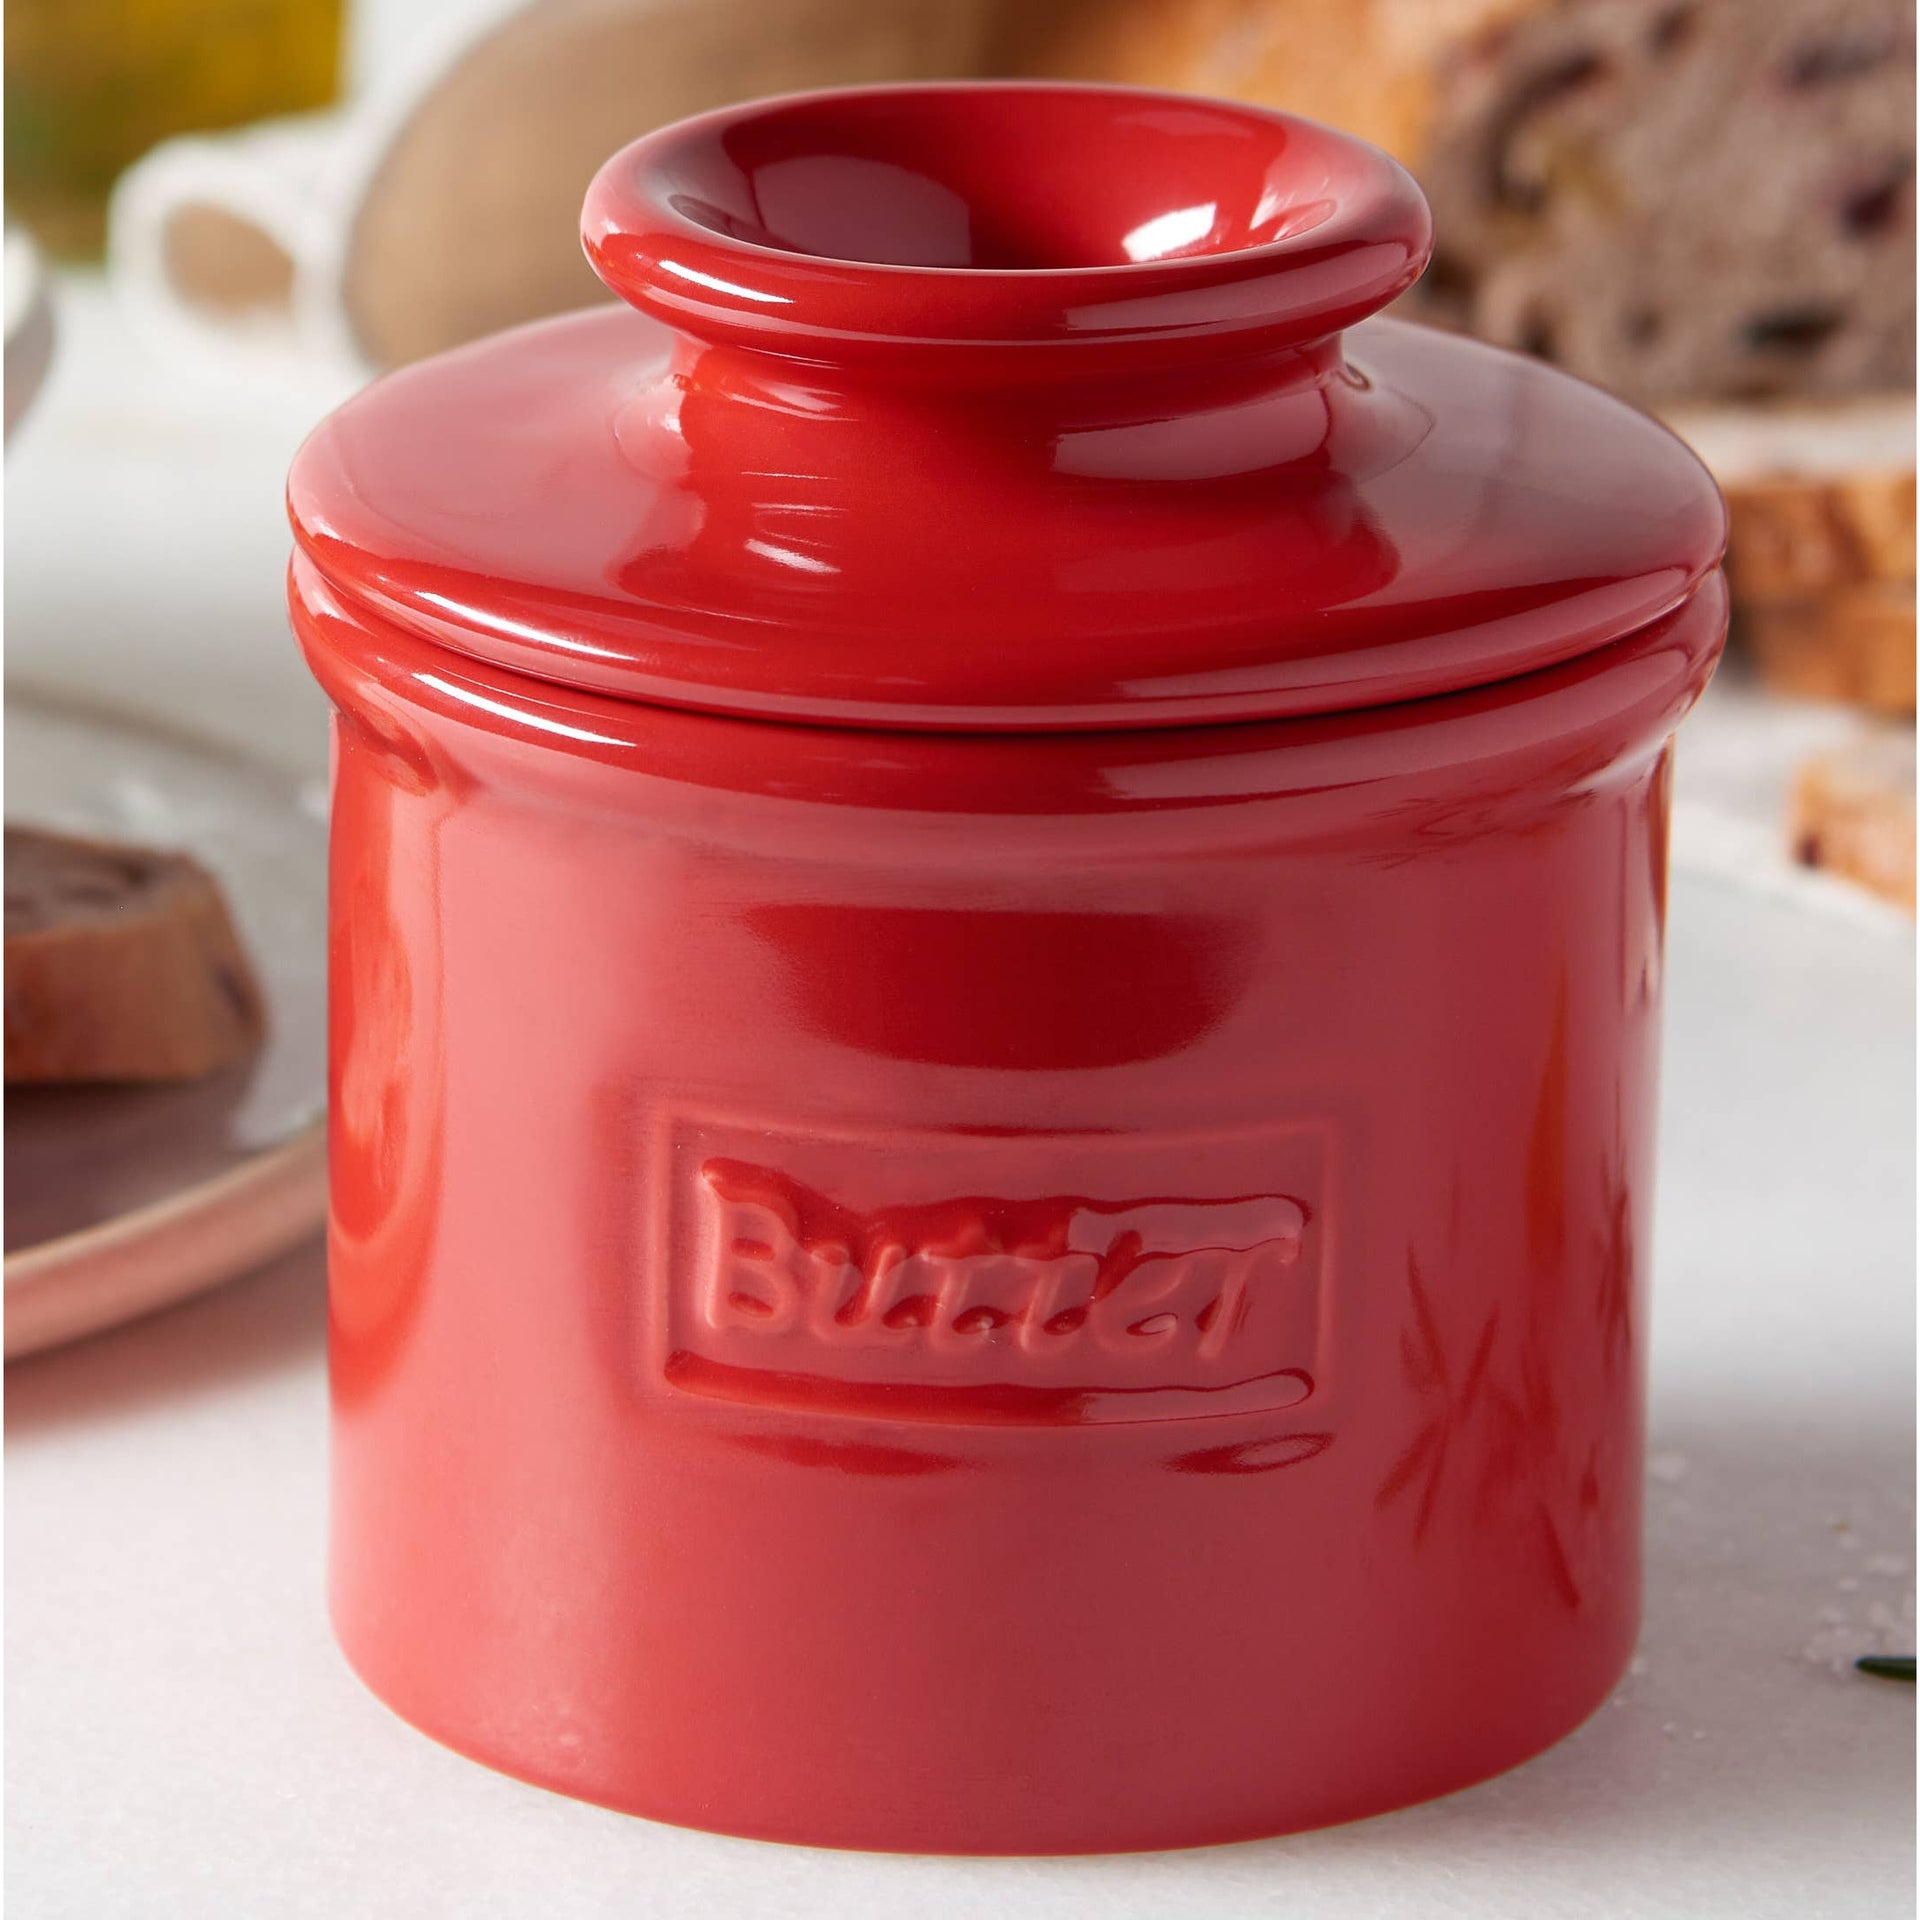 Café Collection Butter Bell Crock - Red